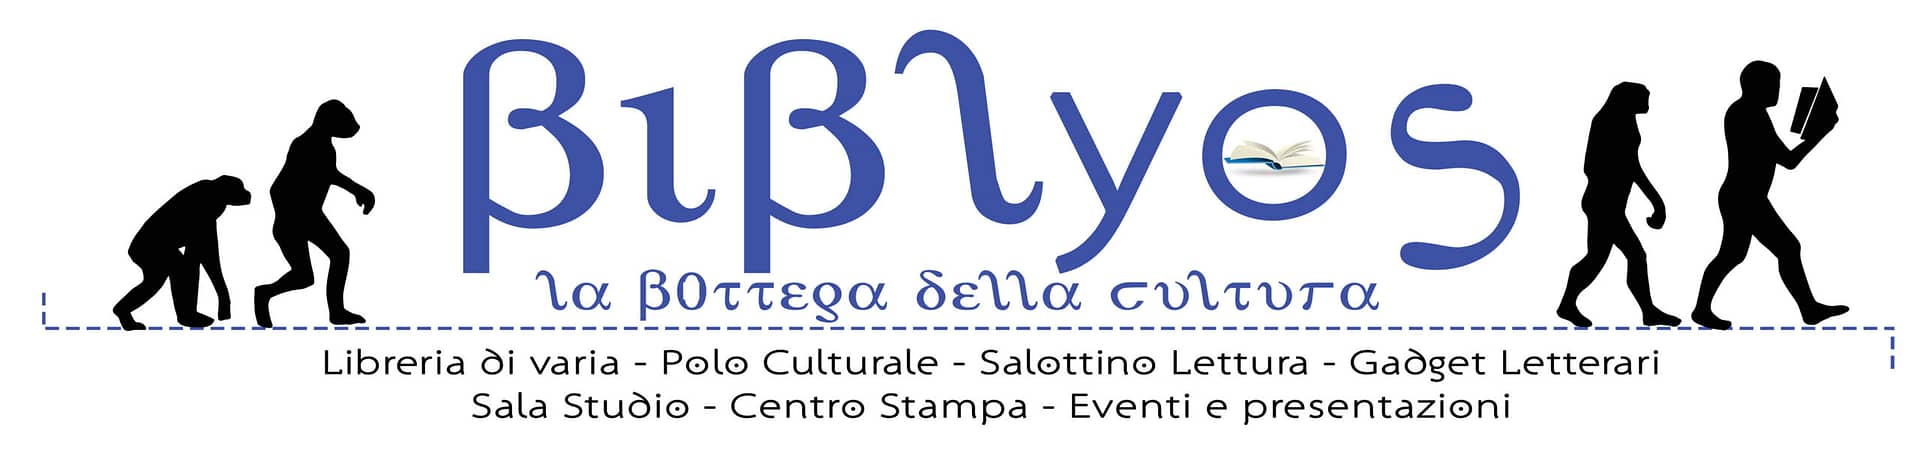 Logo Biblyos per web JPEG